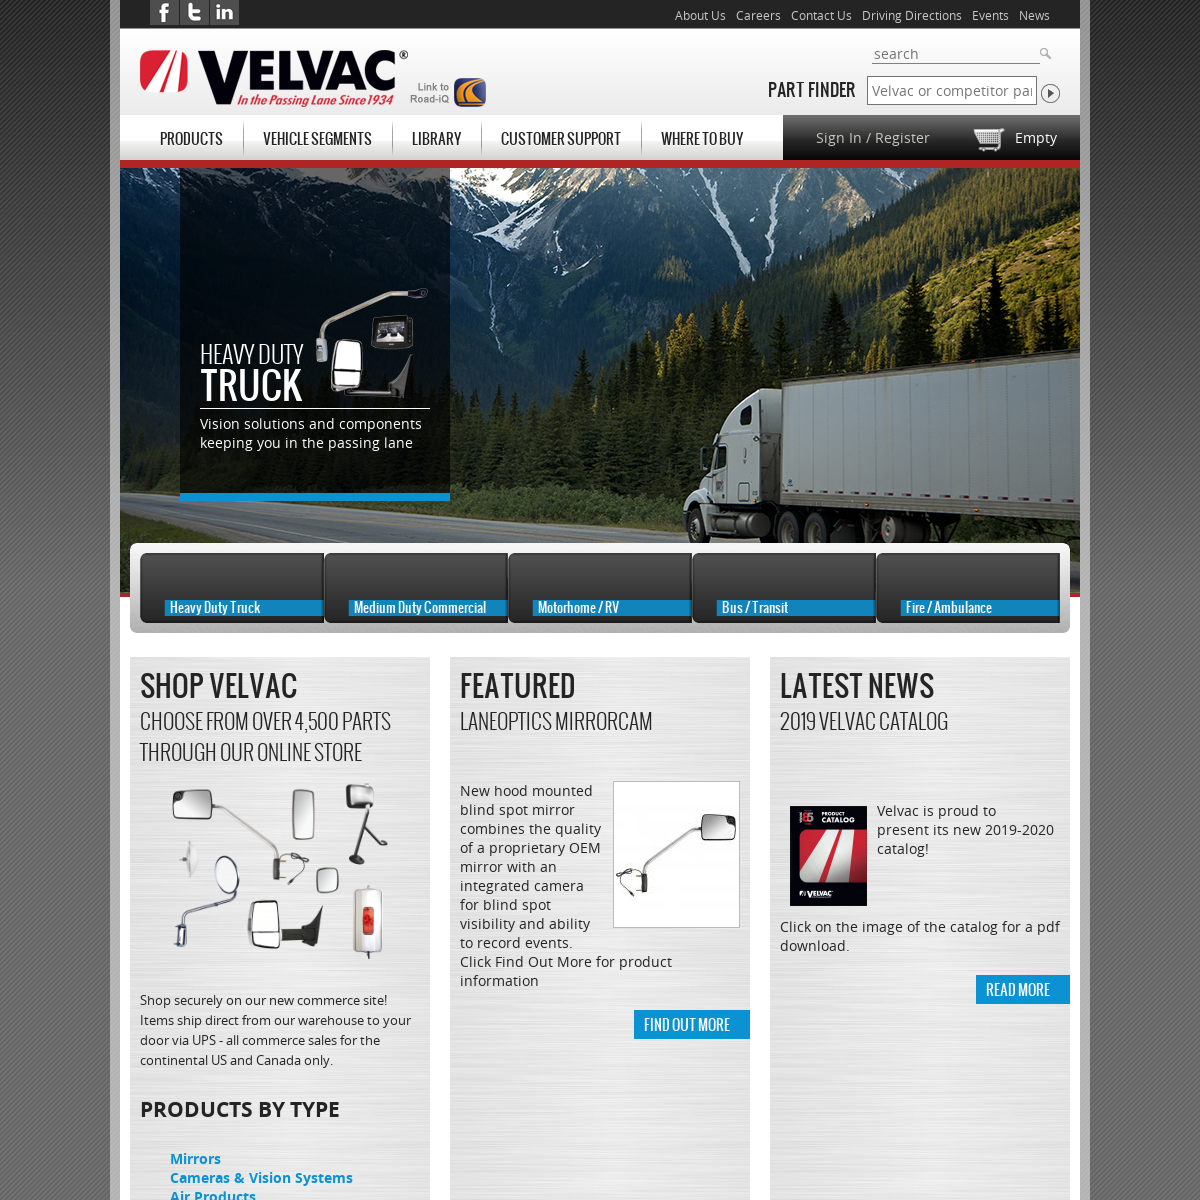 A complete backup of velvac.com